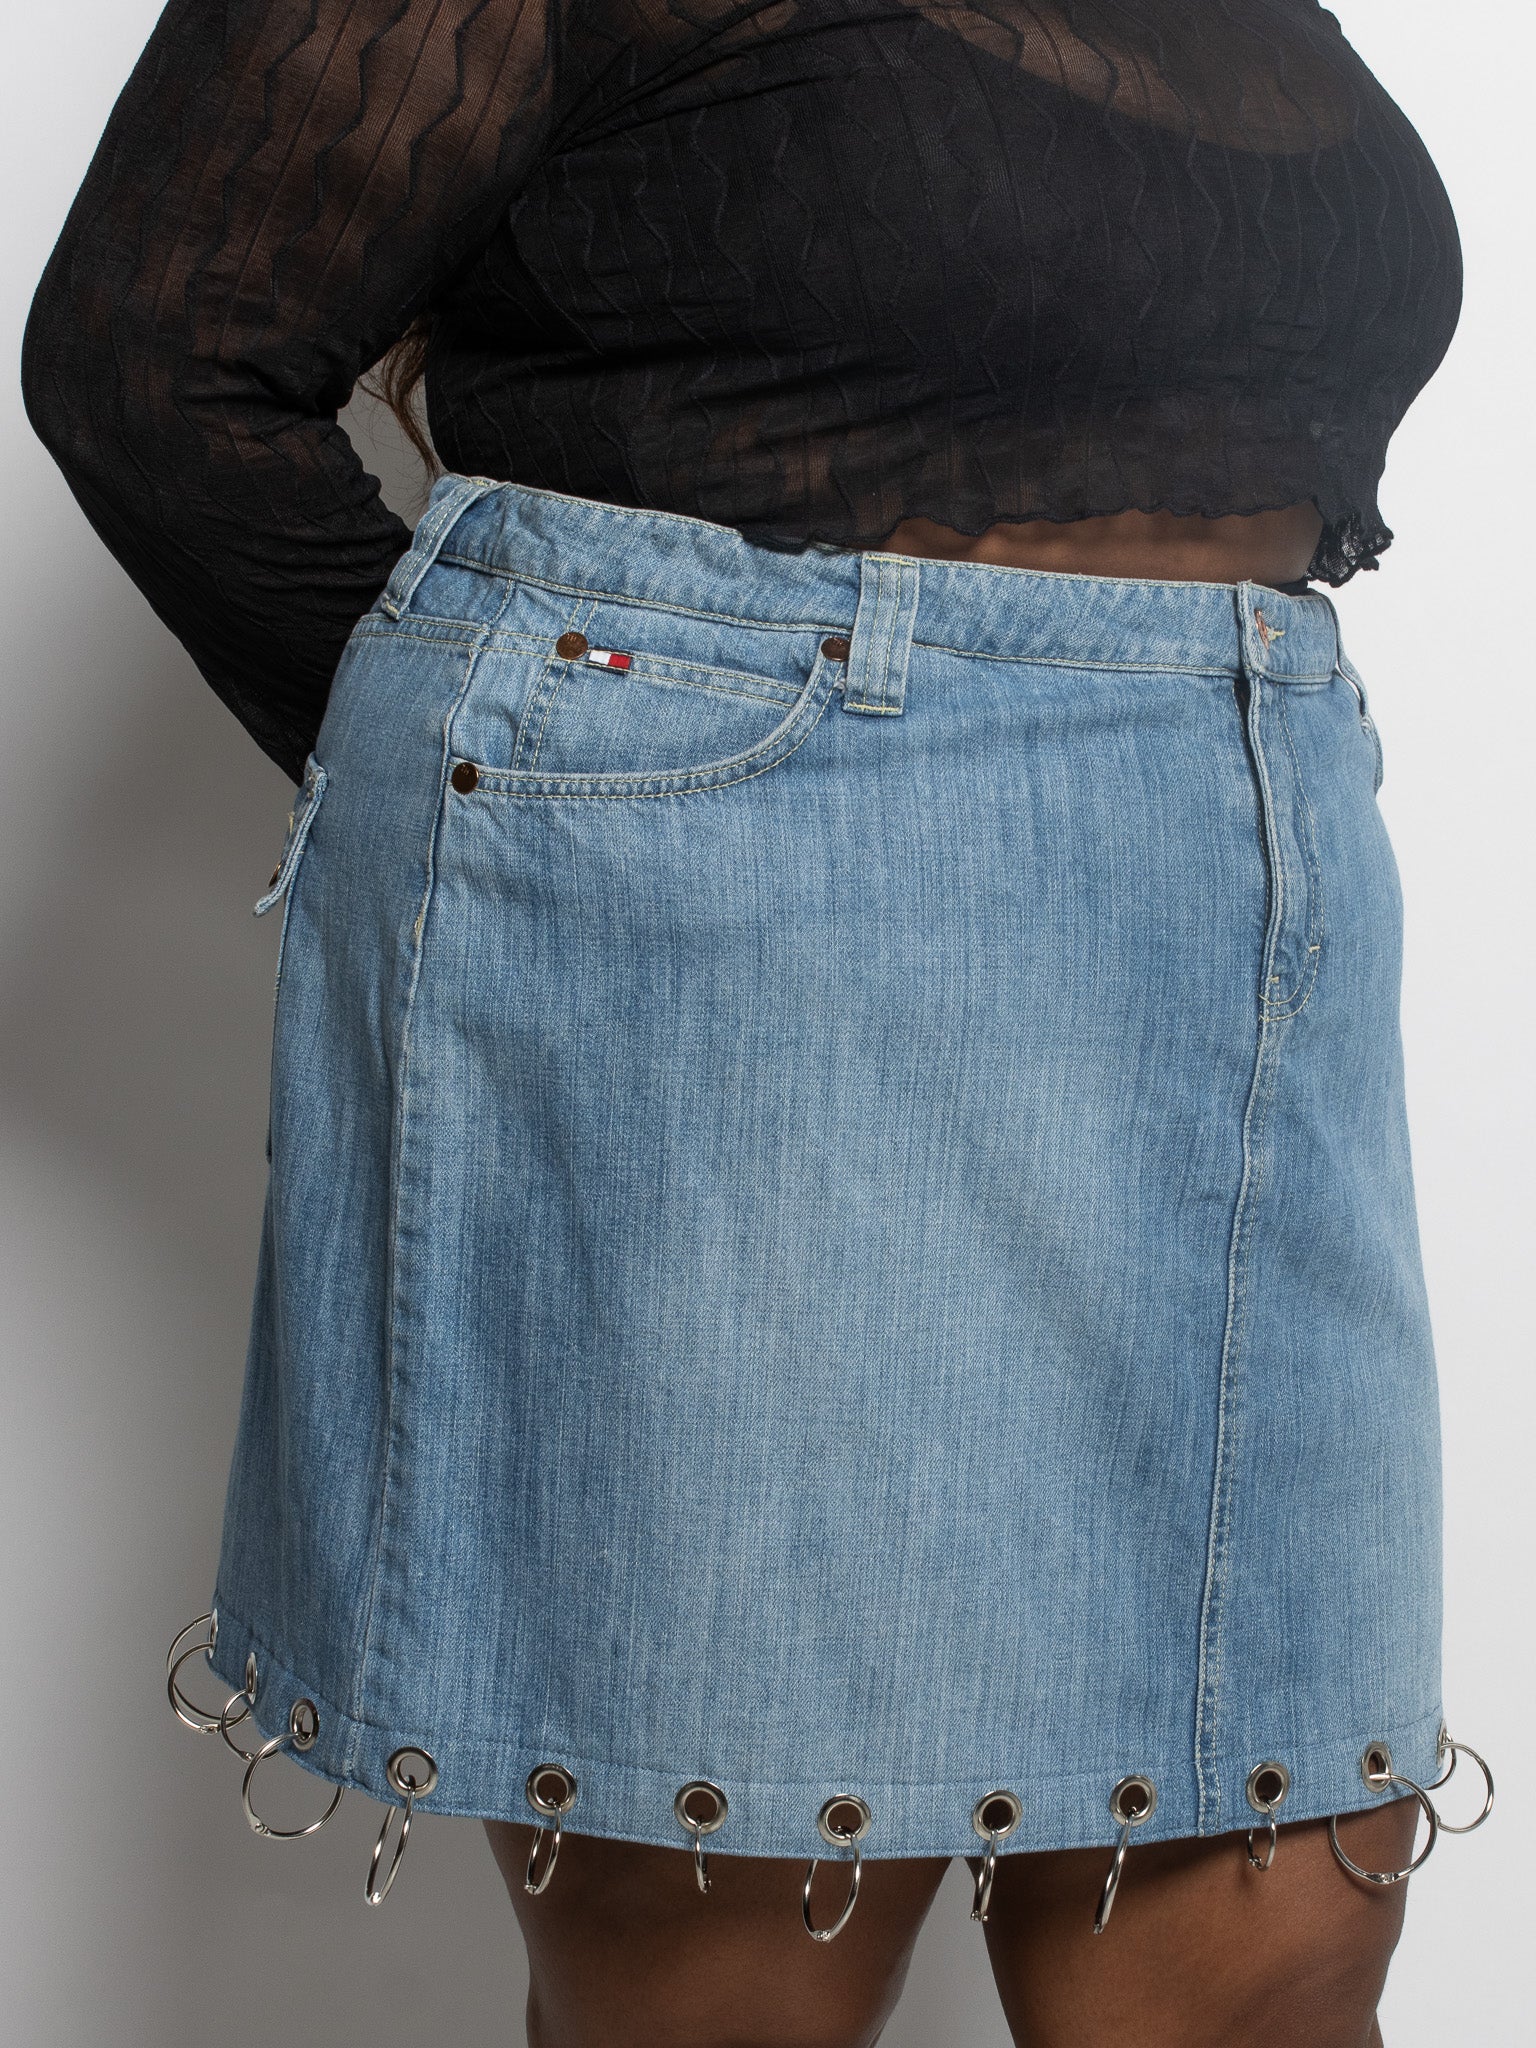 Shop Journal x BRZ - Denim Grommet Skirt (2X)